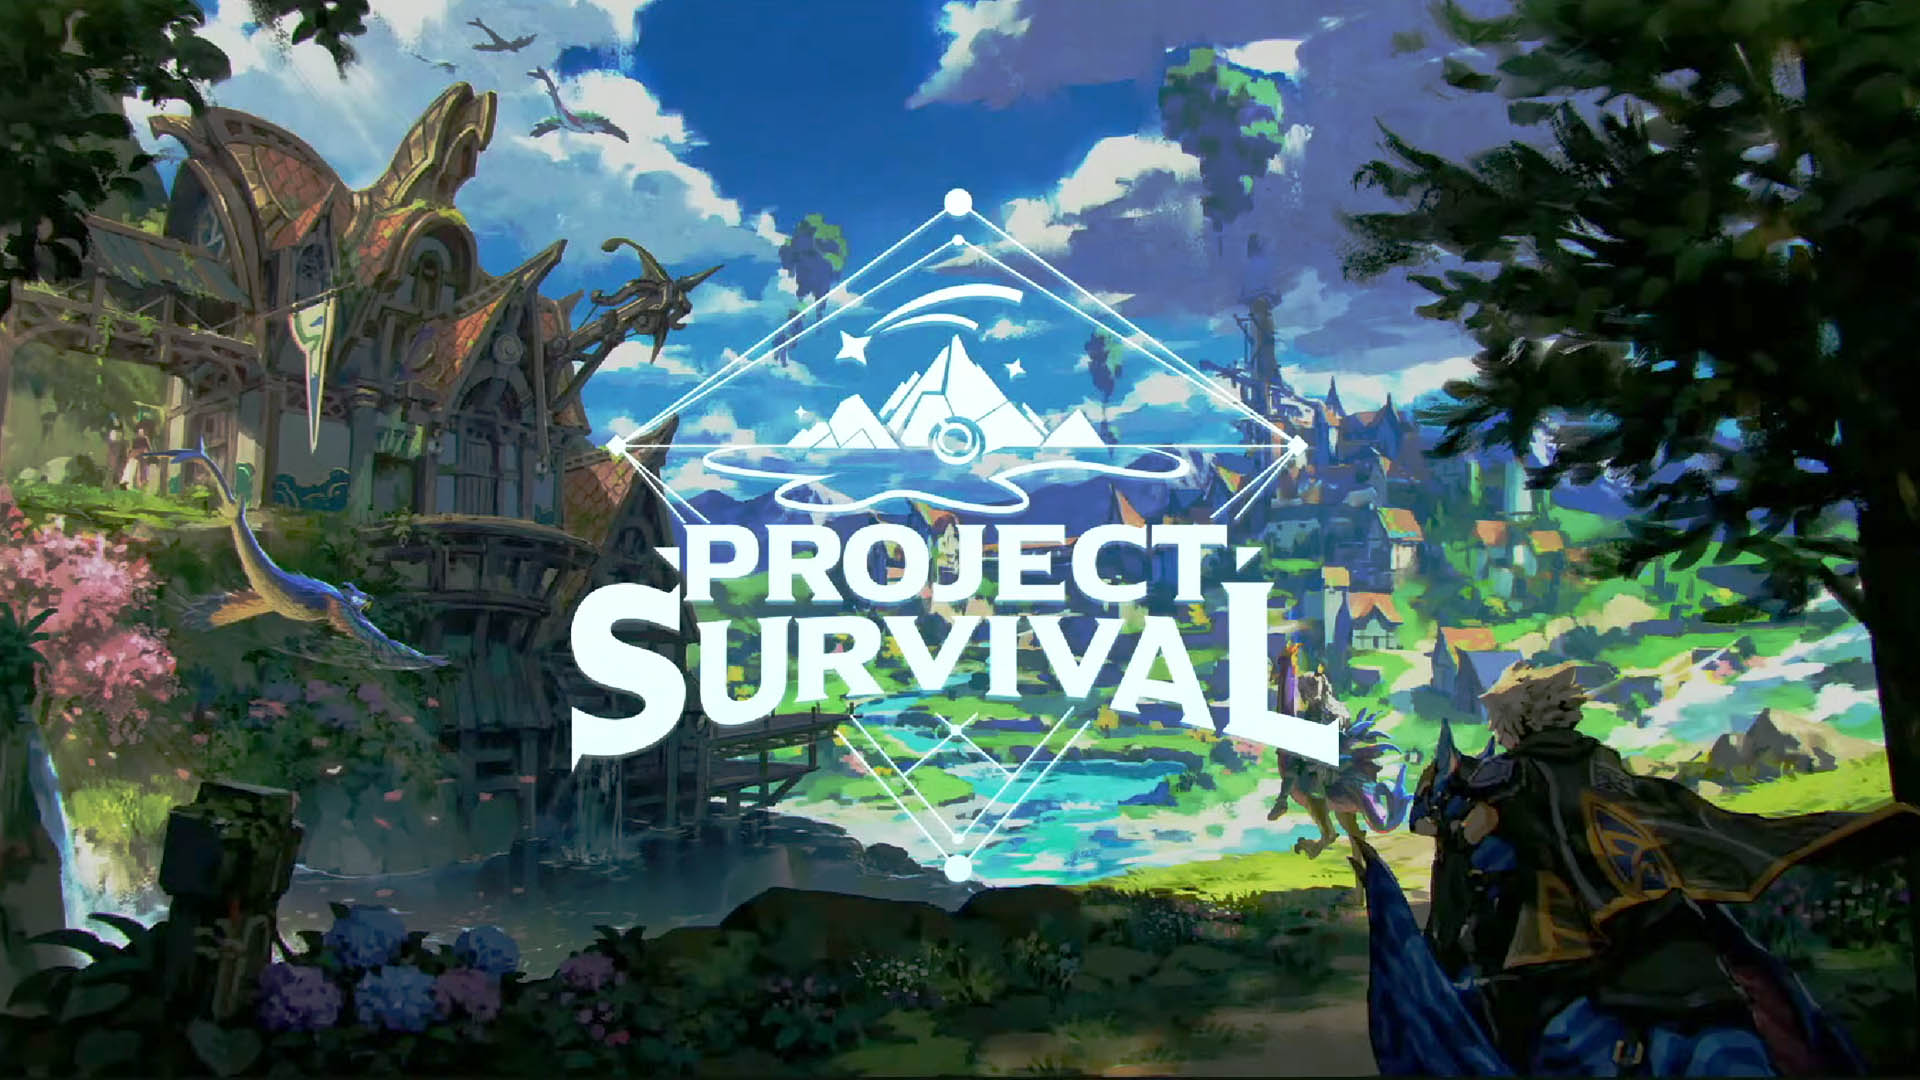 Project Survival